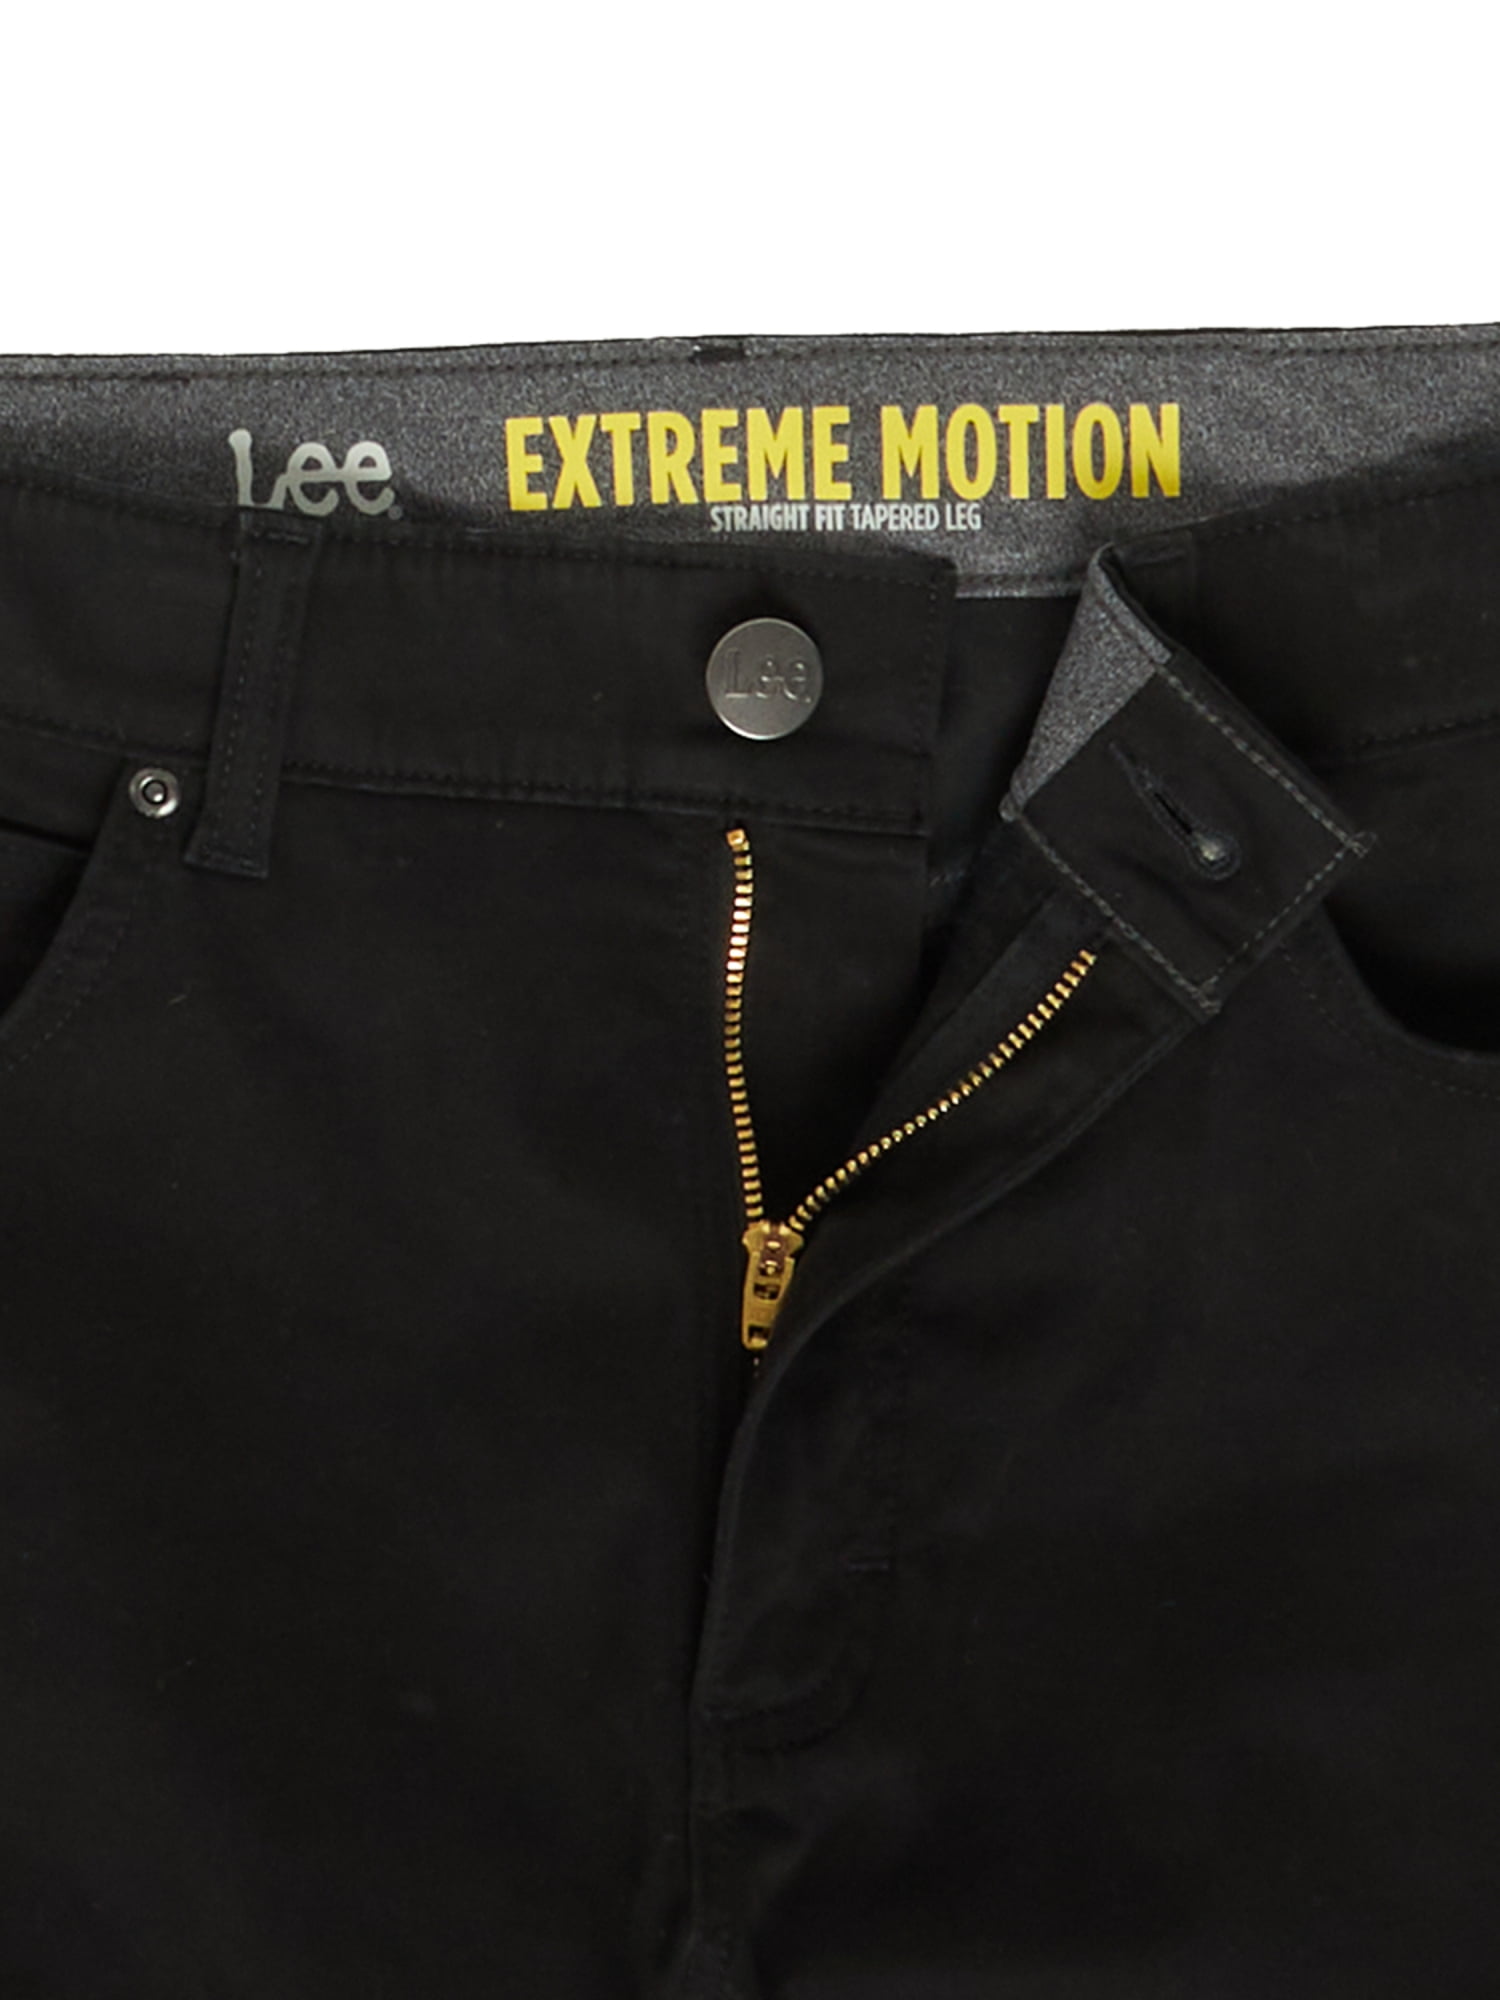 Motion Extreme Lee Pocket 5 Fit Straight Men\'s Pant